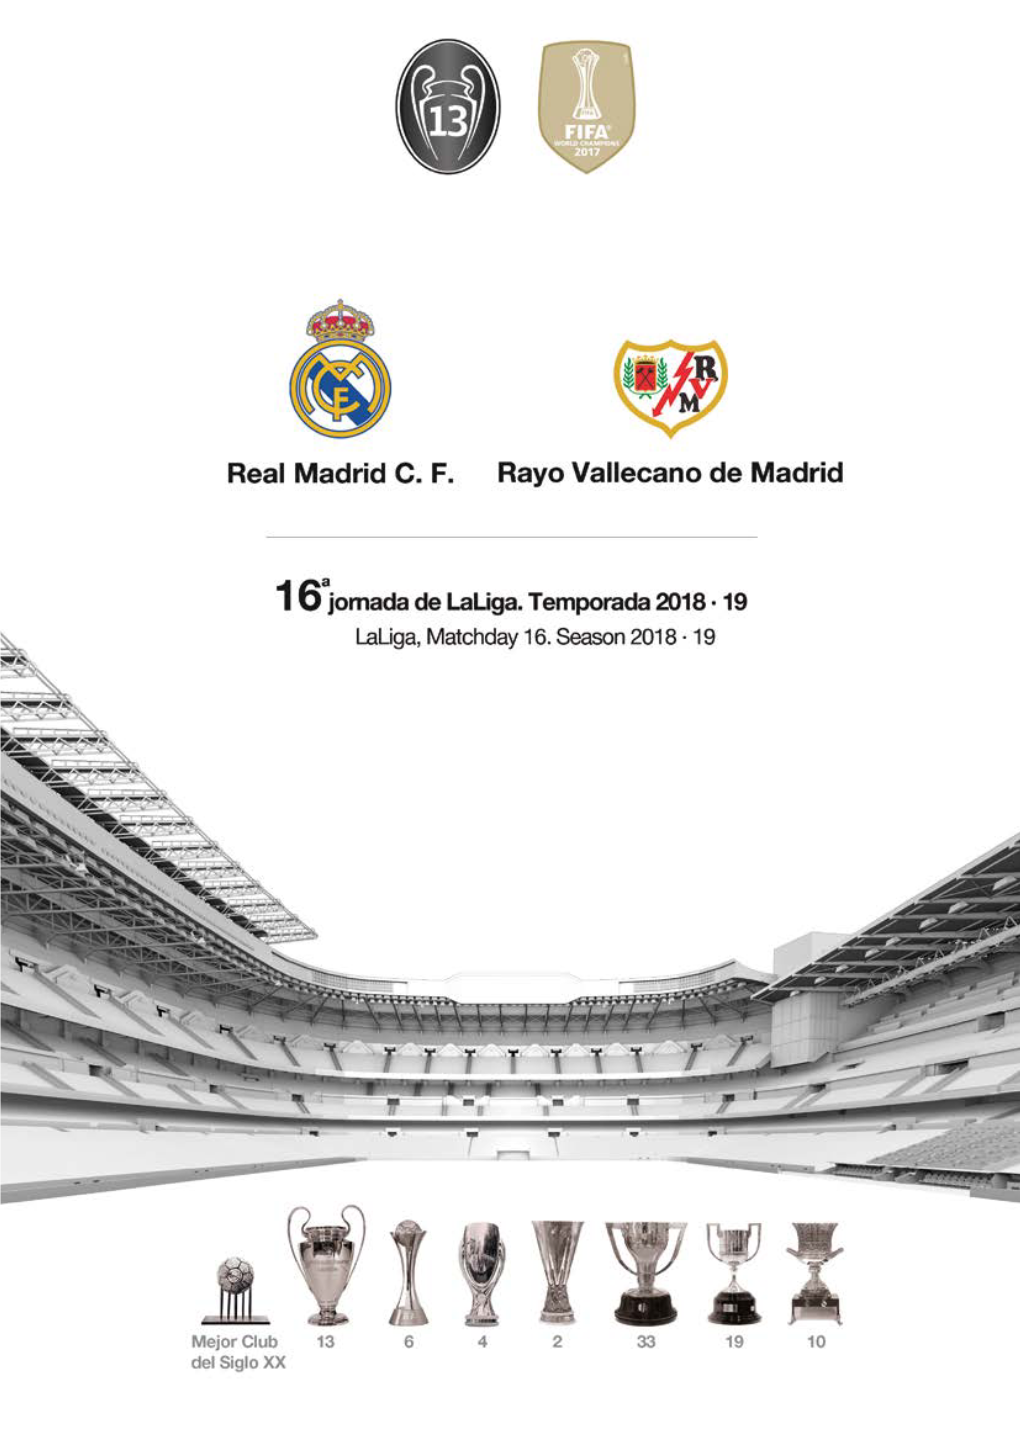 Rayo Vallecano De Madrid 16A Decimosexta Jornada De Laliga Laliga, Matchday 16 Temporada/ Season 2018/2019